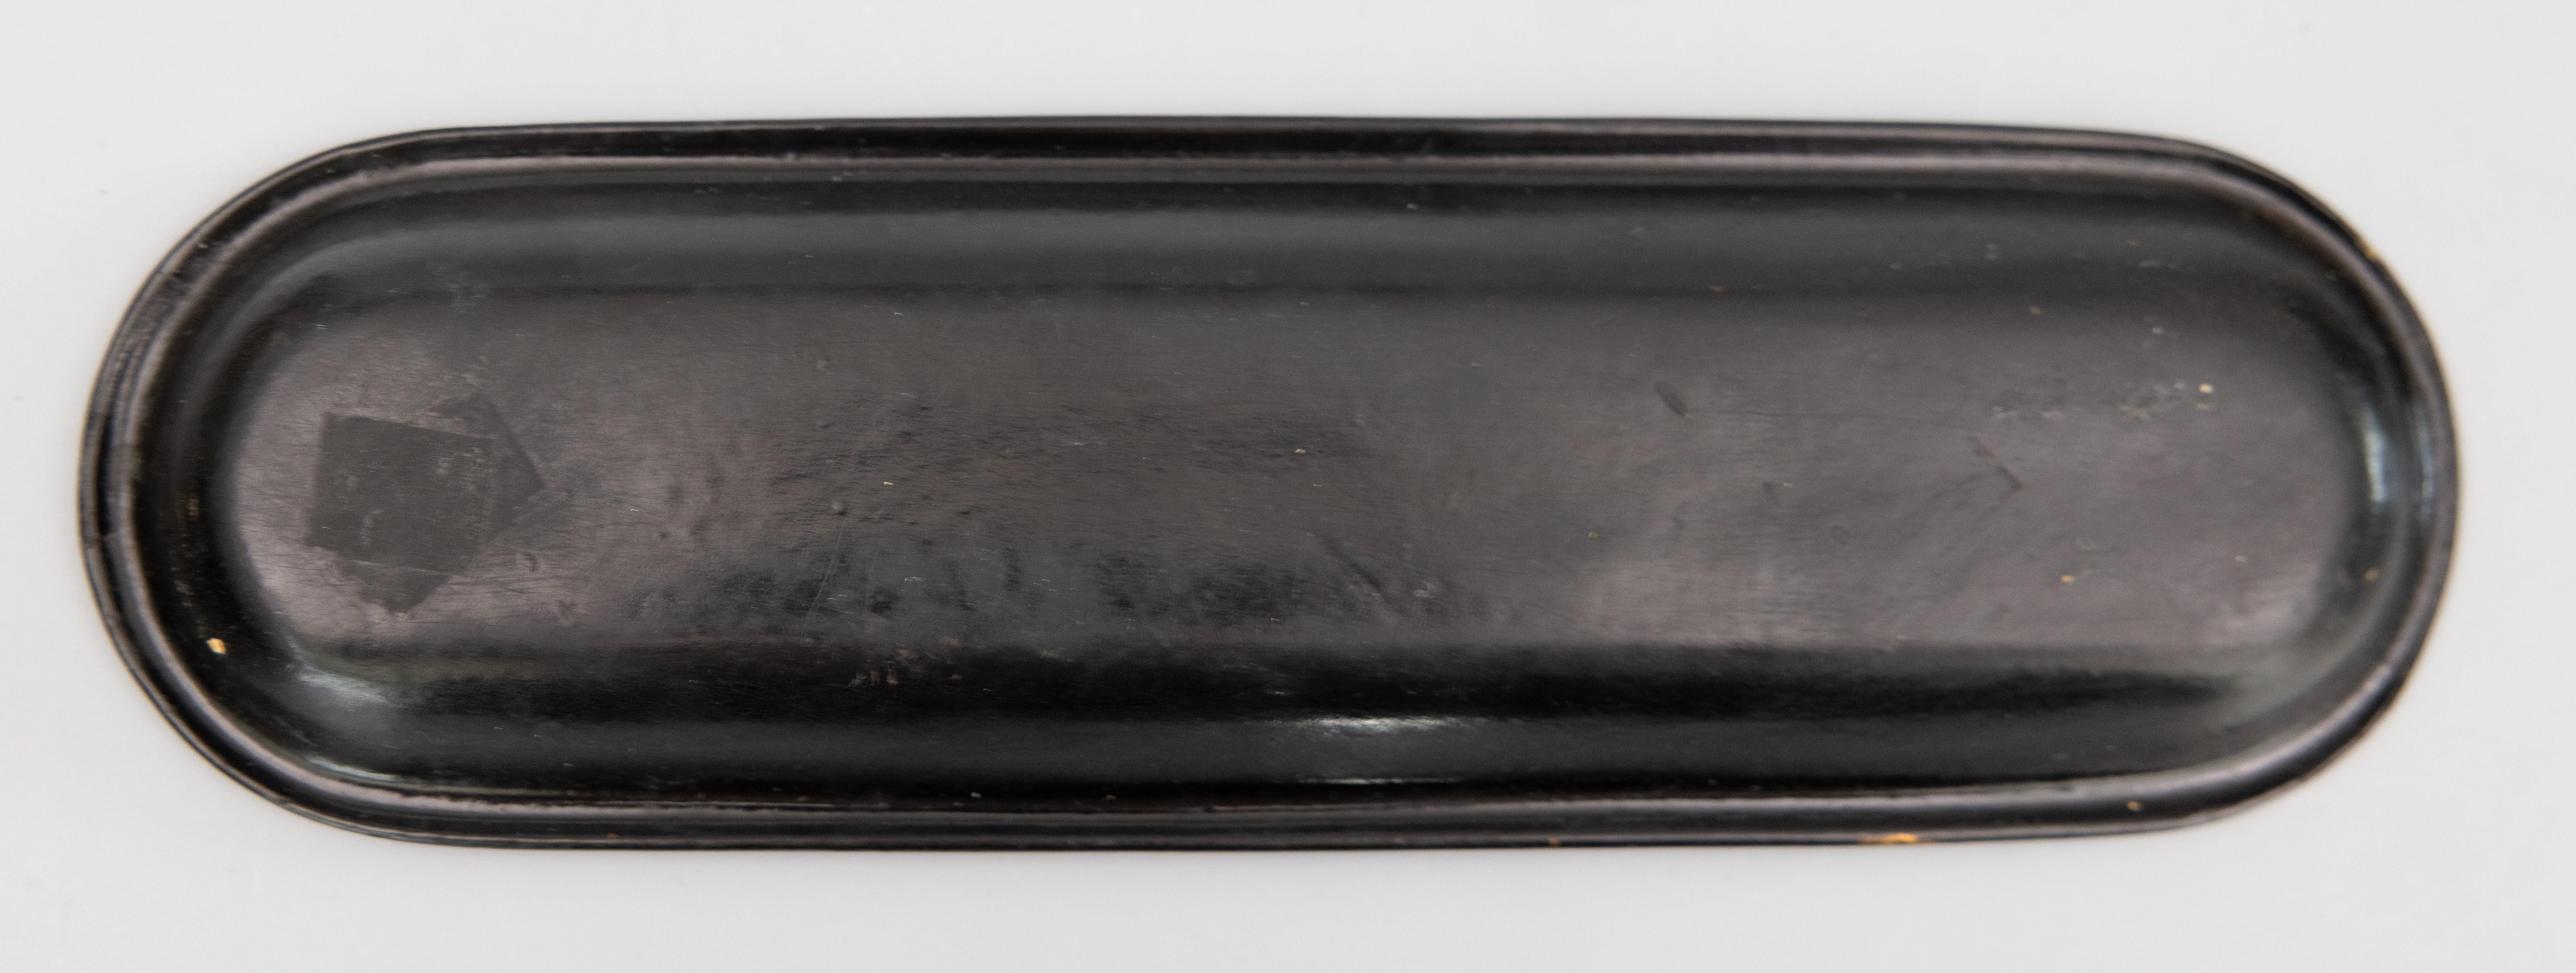 Antique 19th Century English Chinoiserie Papier Mache Pen Tray For Sale 2